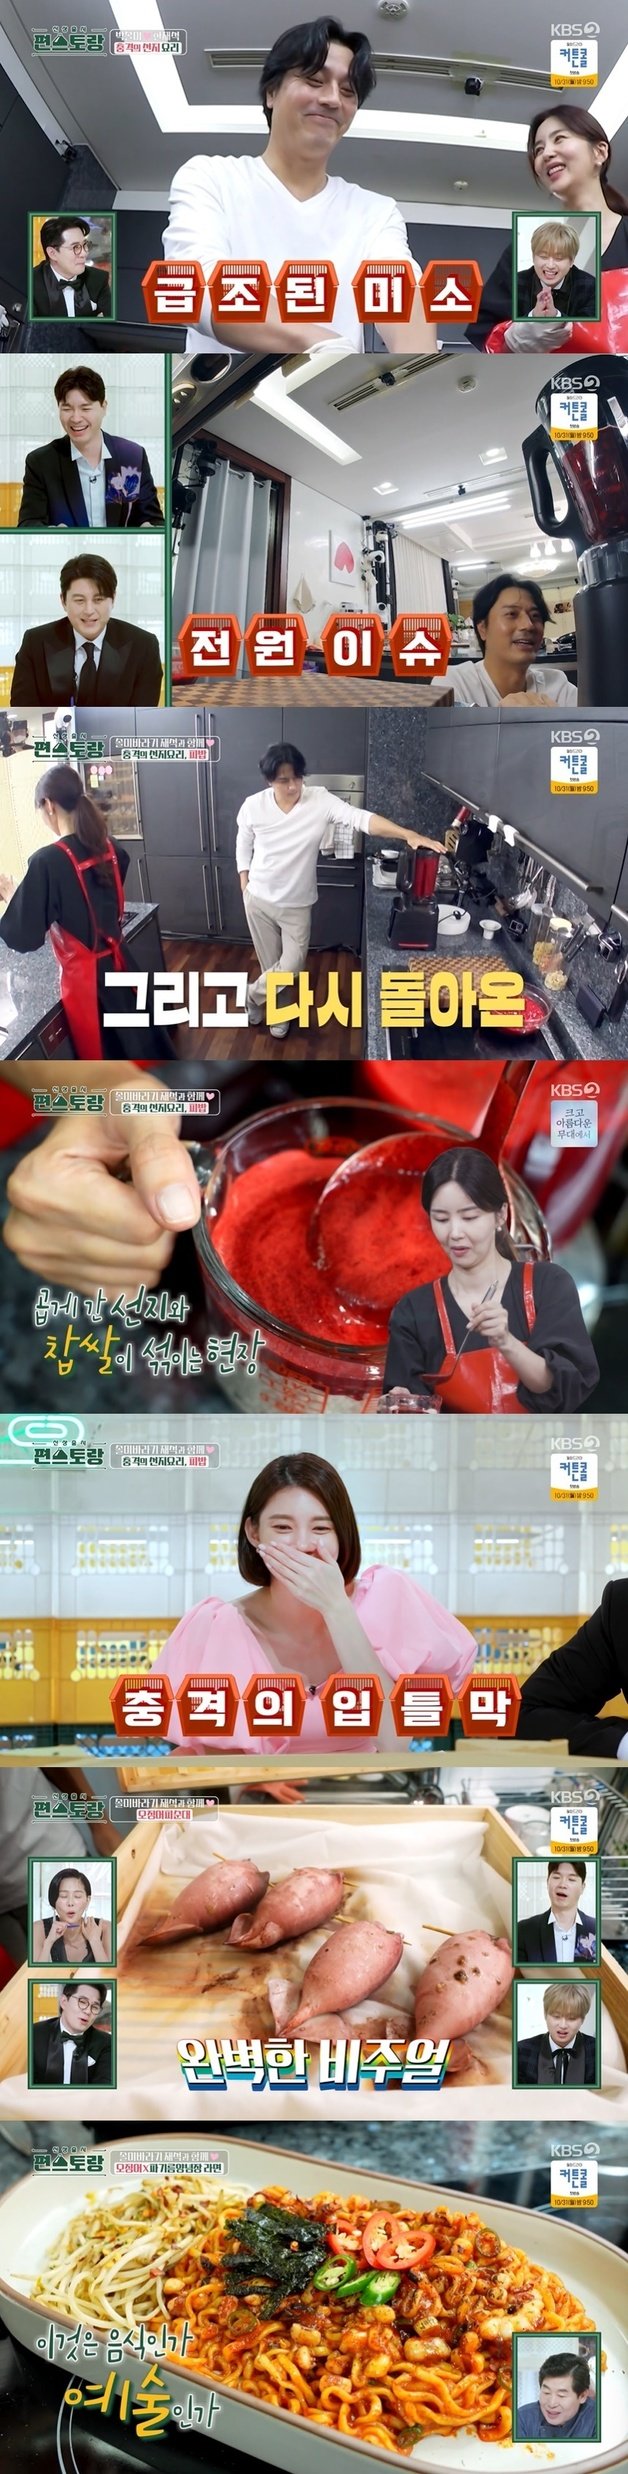 KBS 2TV ‘신상출시 편스토랑’ 캡처